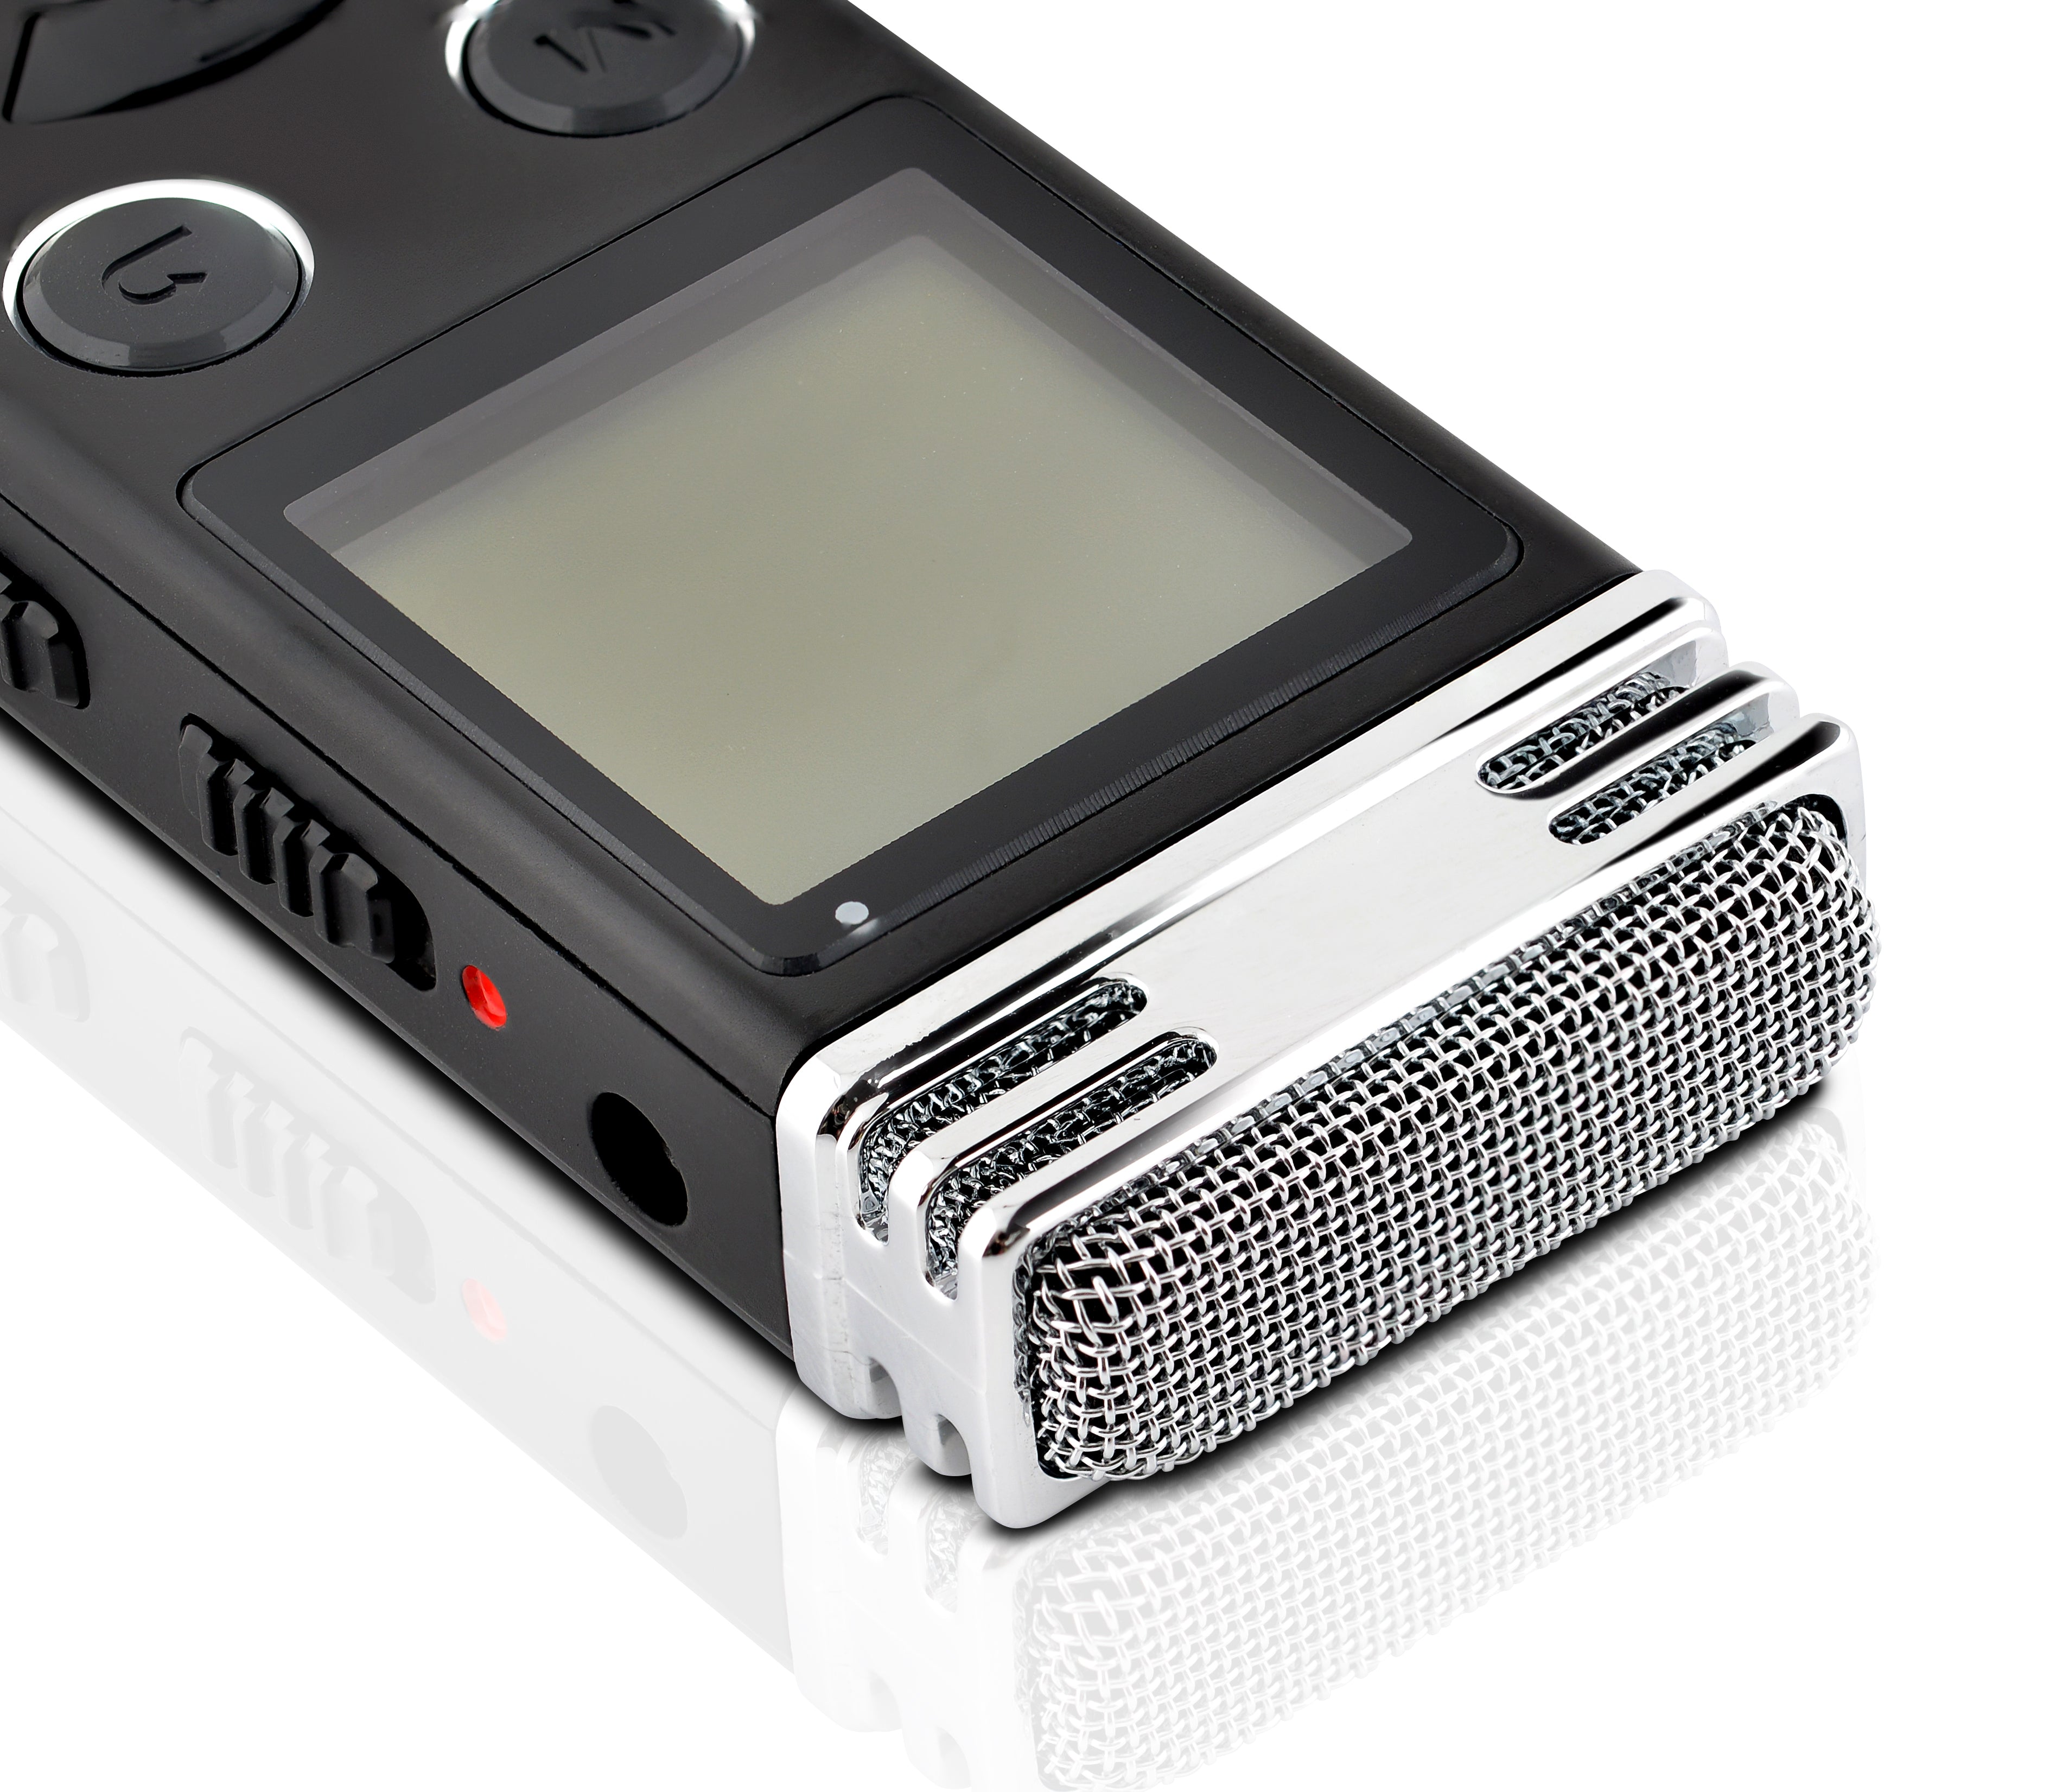 Kodak VRC450 Stereo Digital Voice Recorder with 8GB Memory